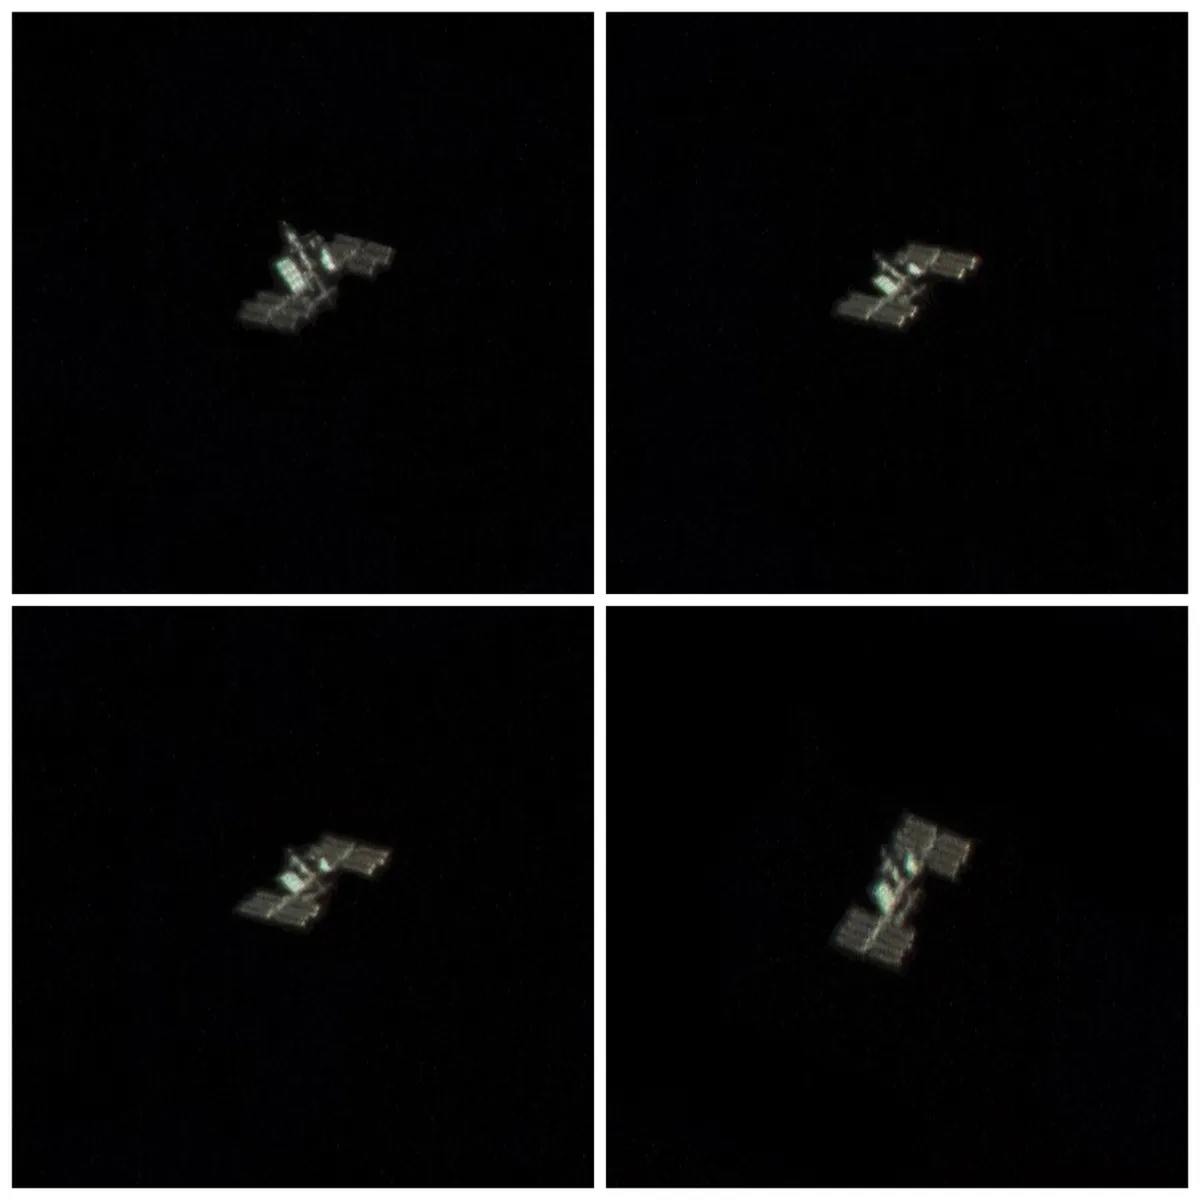 International Space Station Rich Addis, Wallasey, 28 March 2019 Equipment: ZWO ASI120MC CMOS camera, Celestron NexStar 6SE Schmidt-Cassegrain